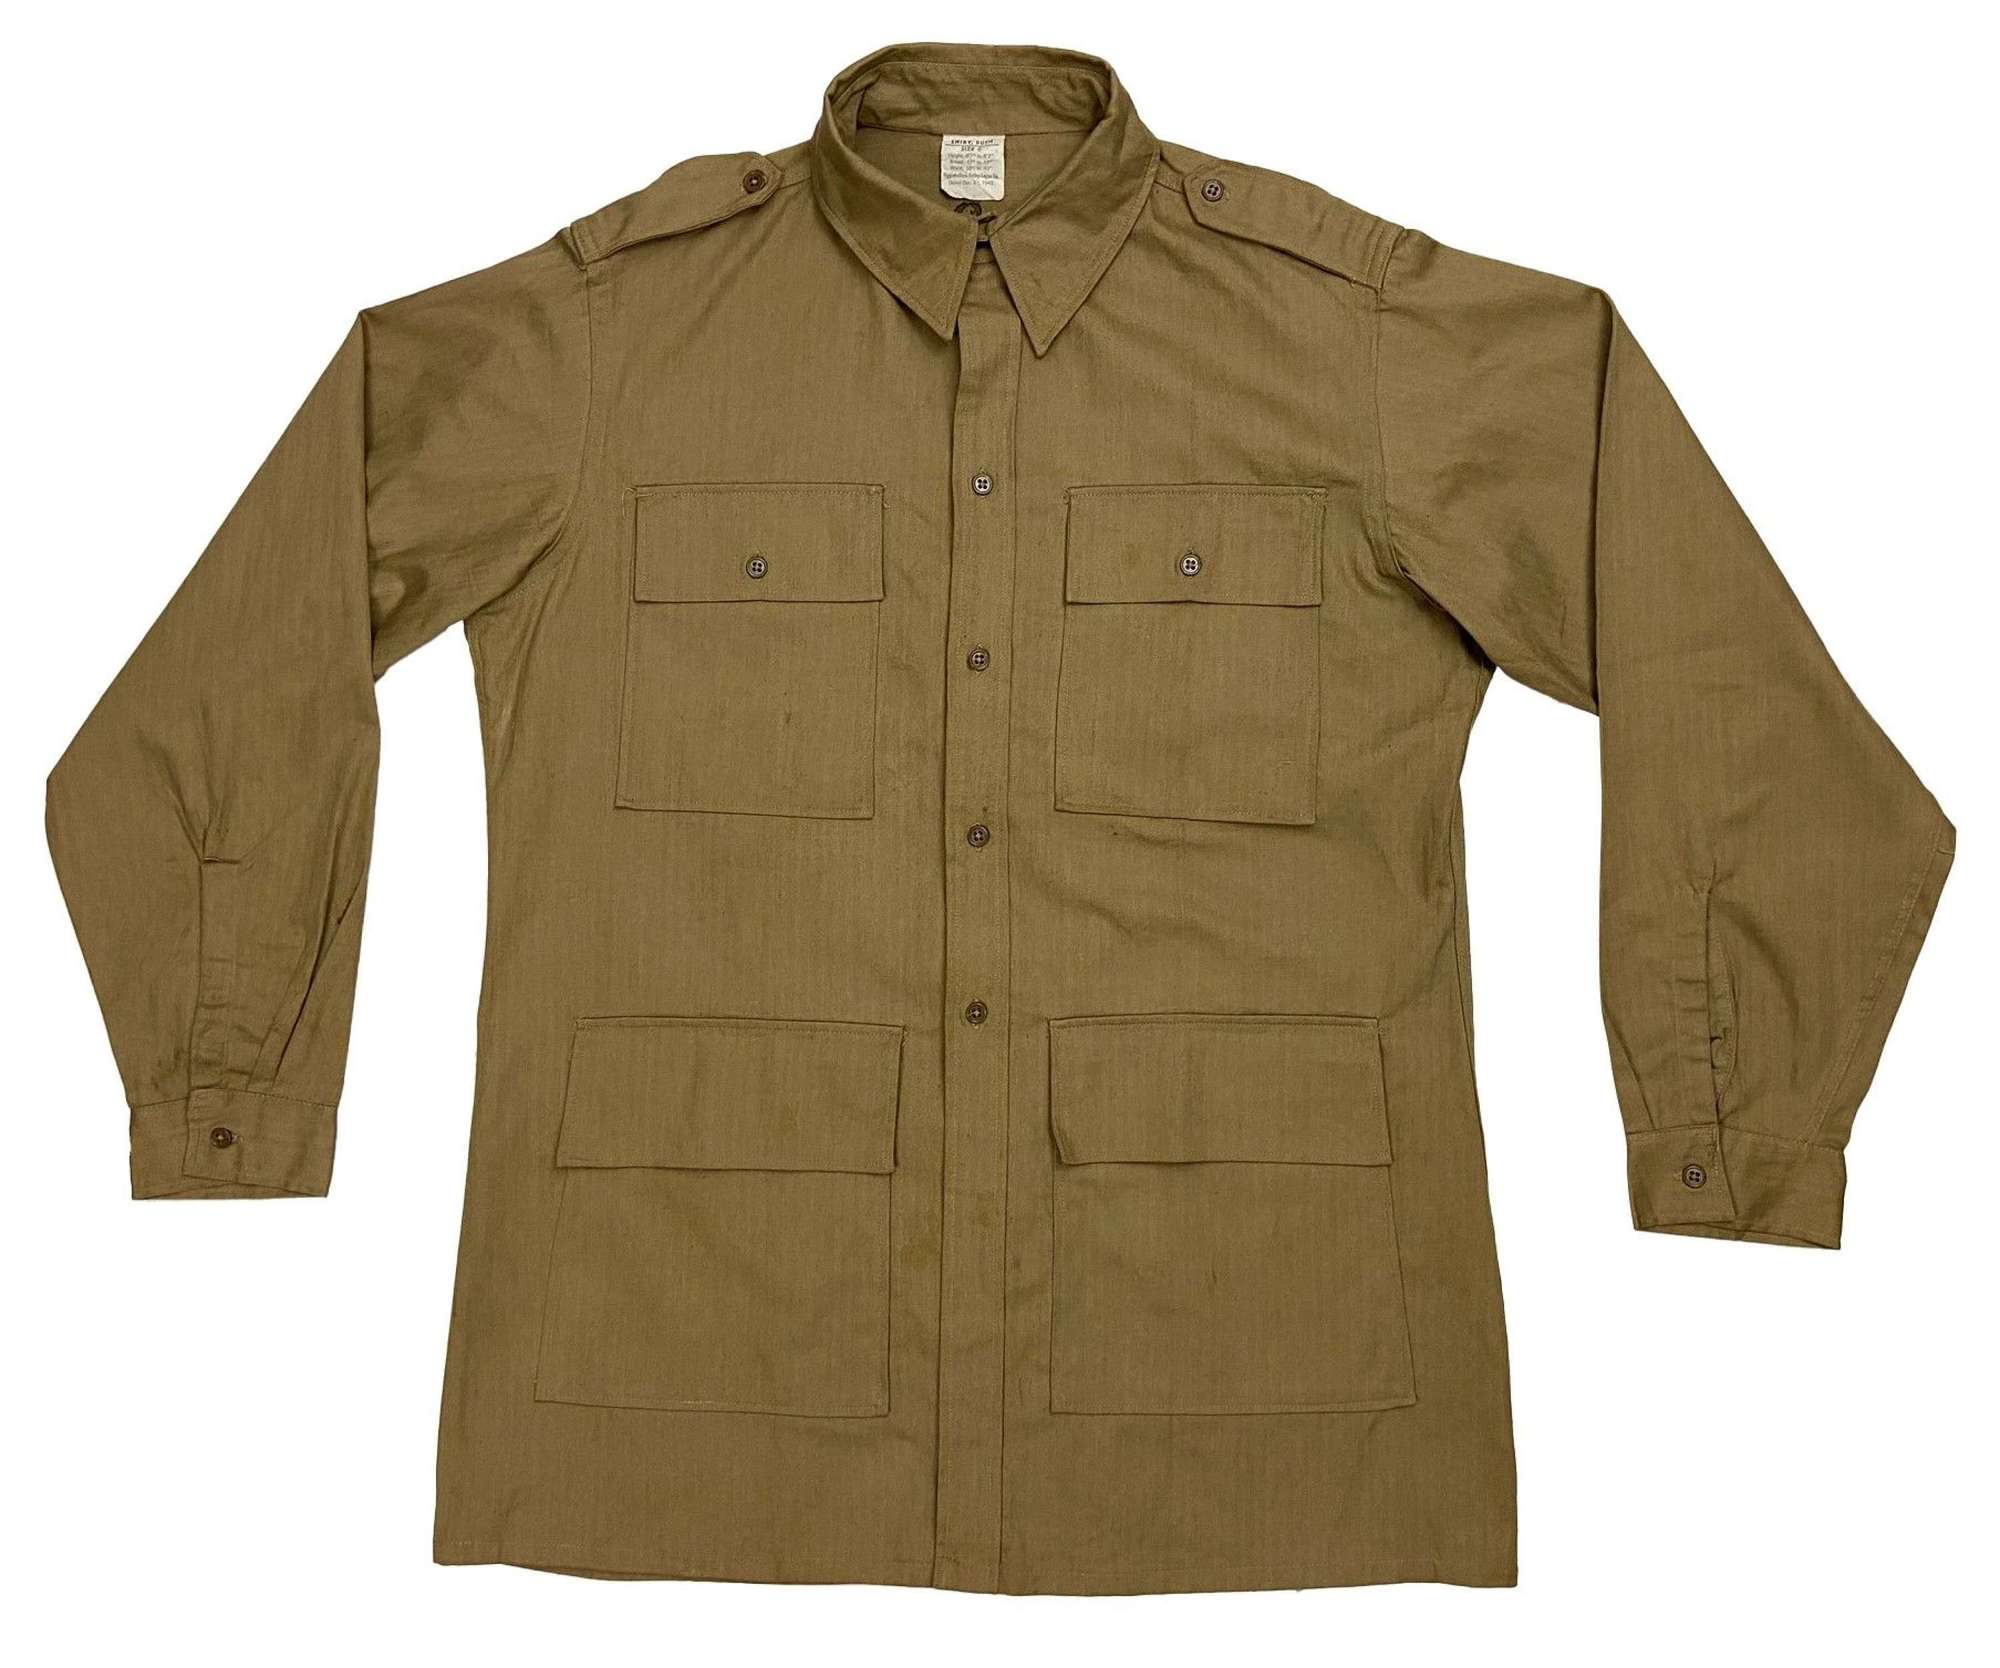 Rare 1942 Dated War Aid HBT Bush Jacket - Large Size